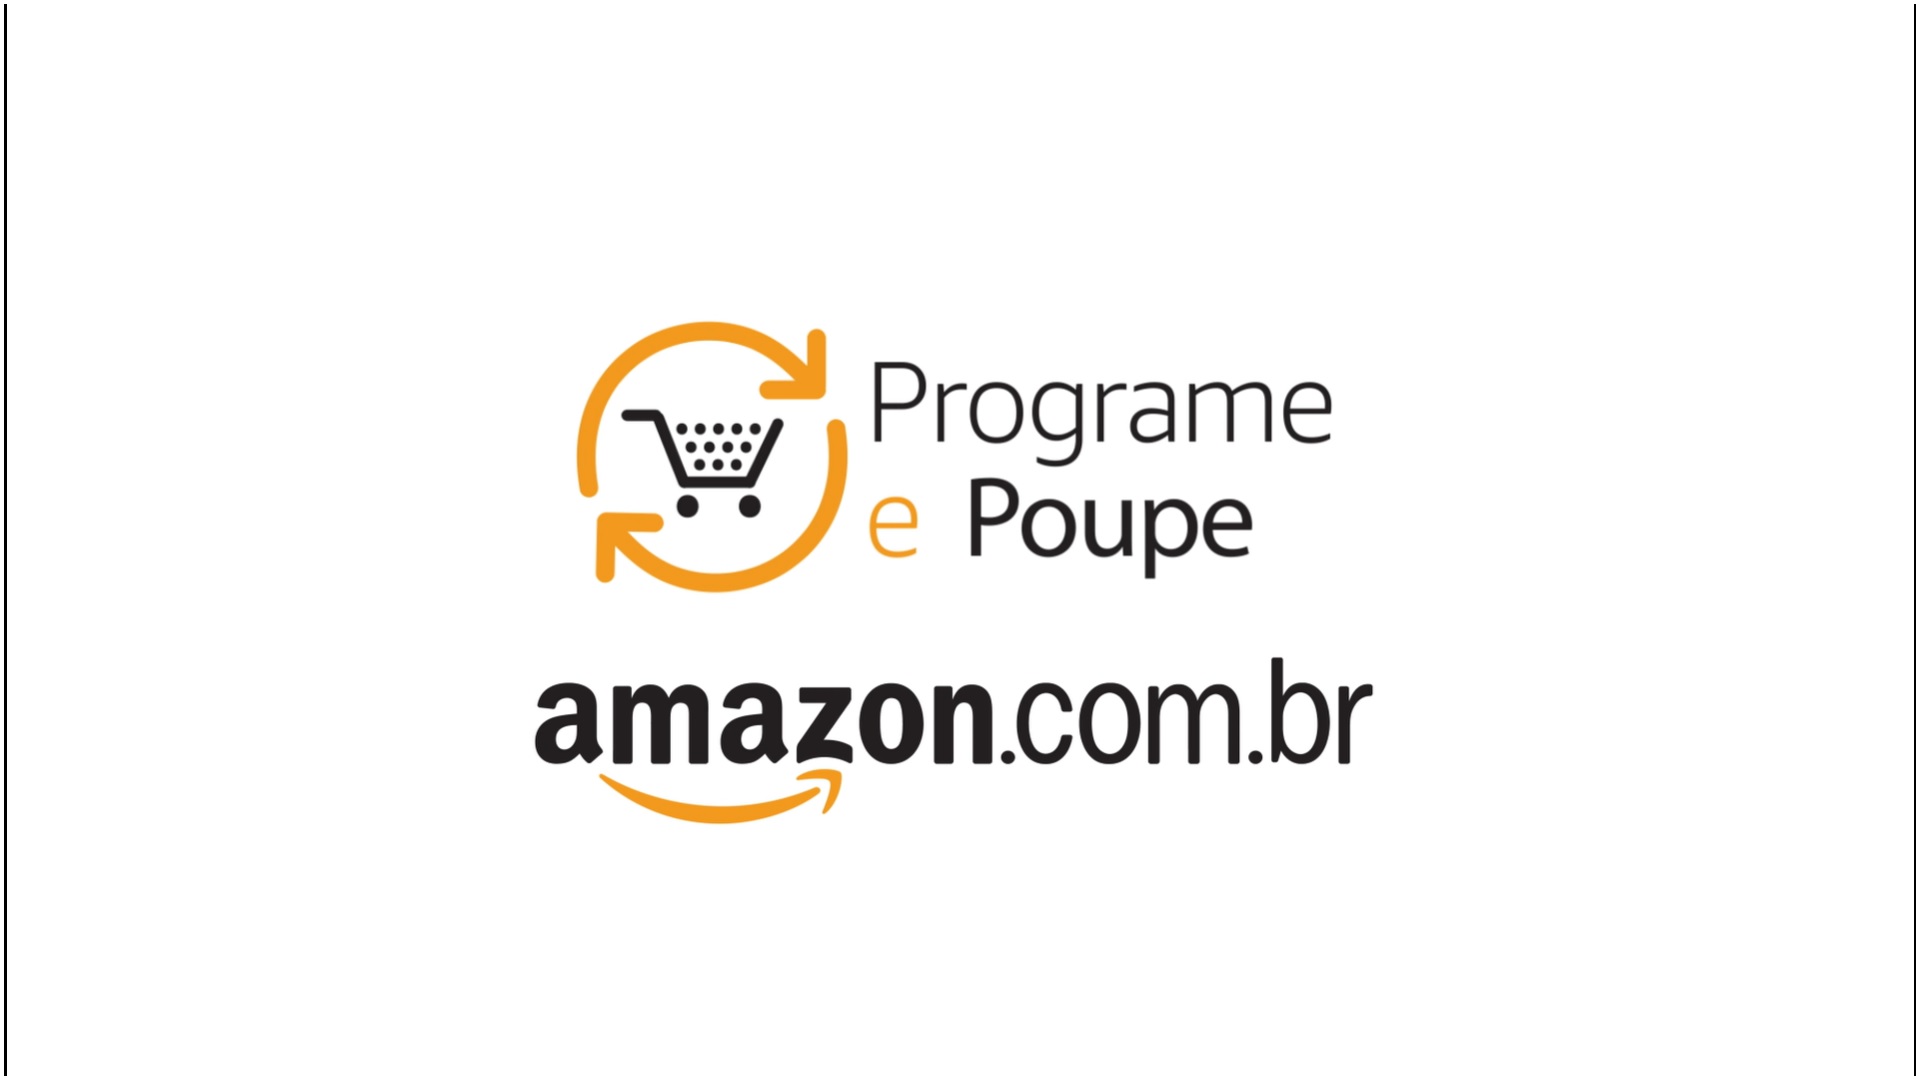 O "Programe e Poupe" da Amazon vai servir como um delivery de compras do mercado